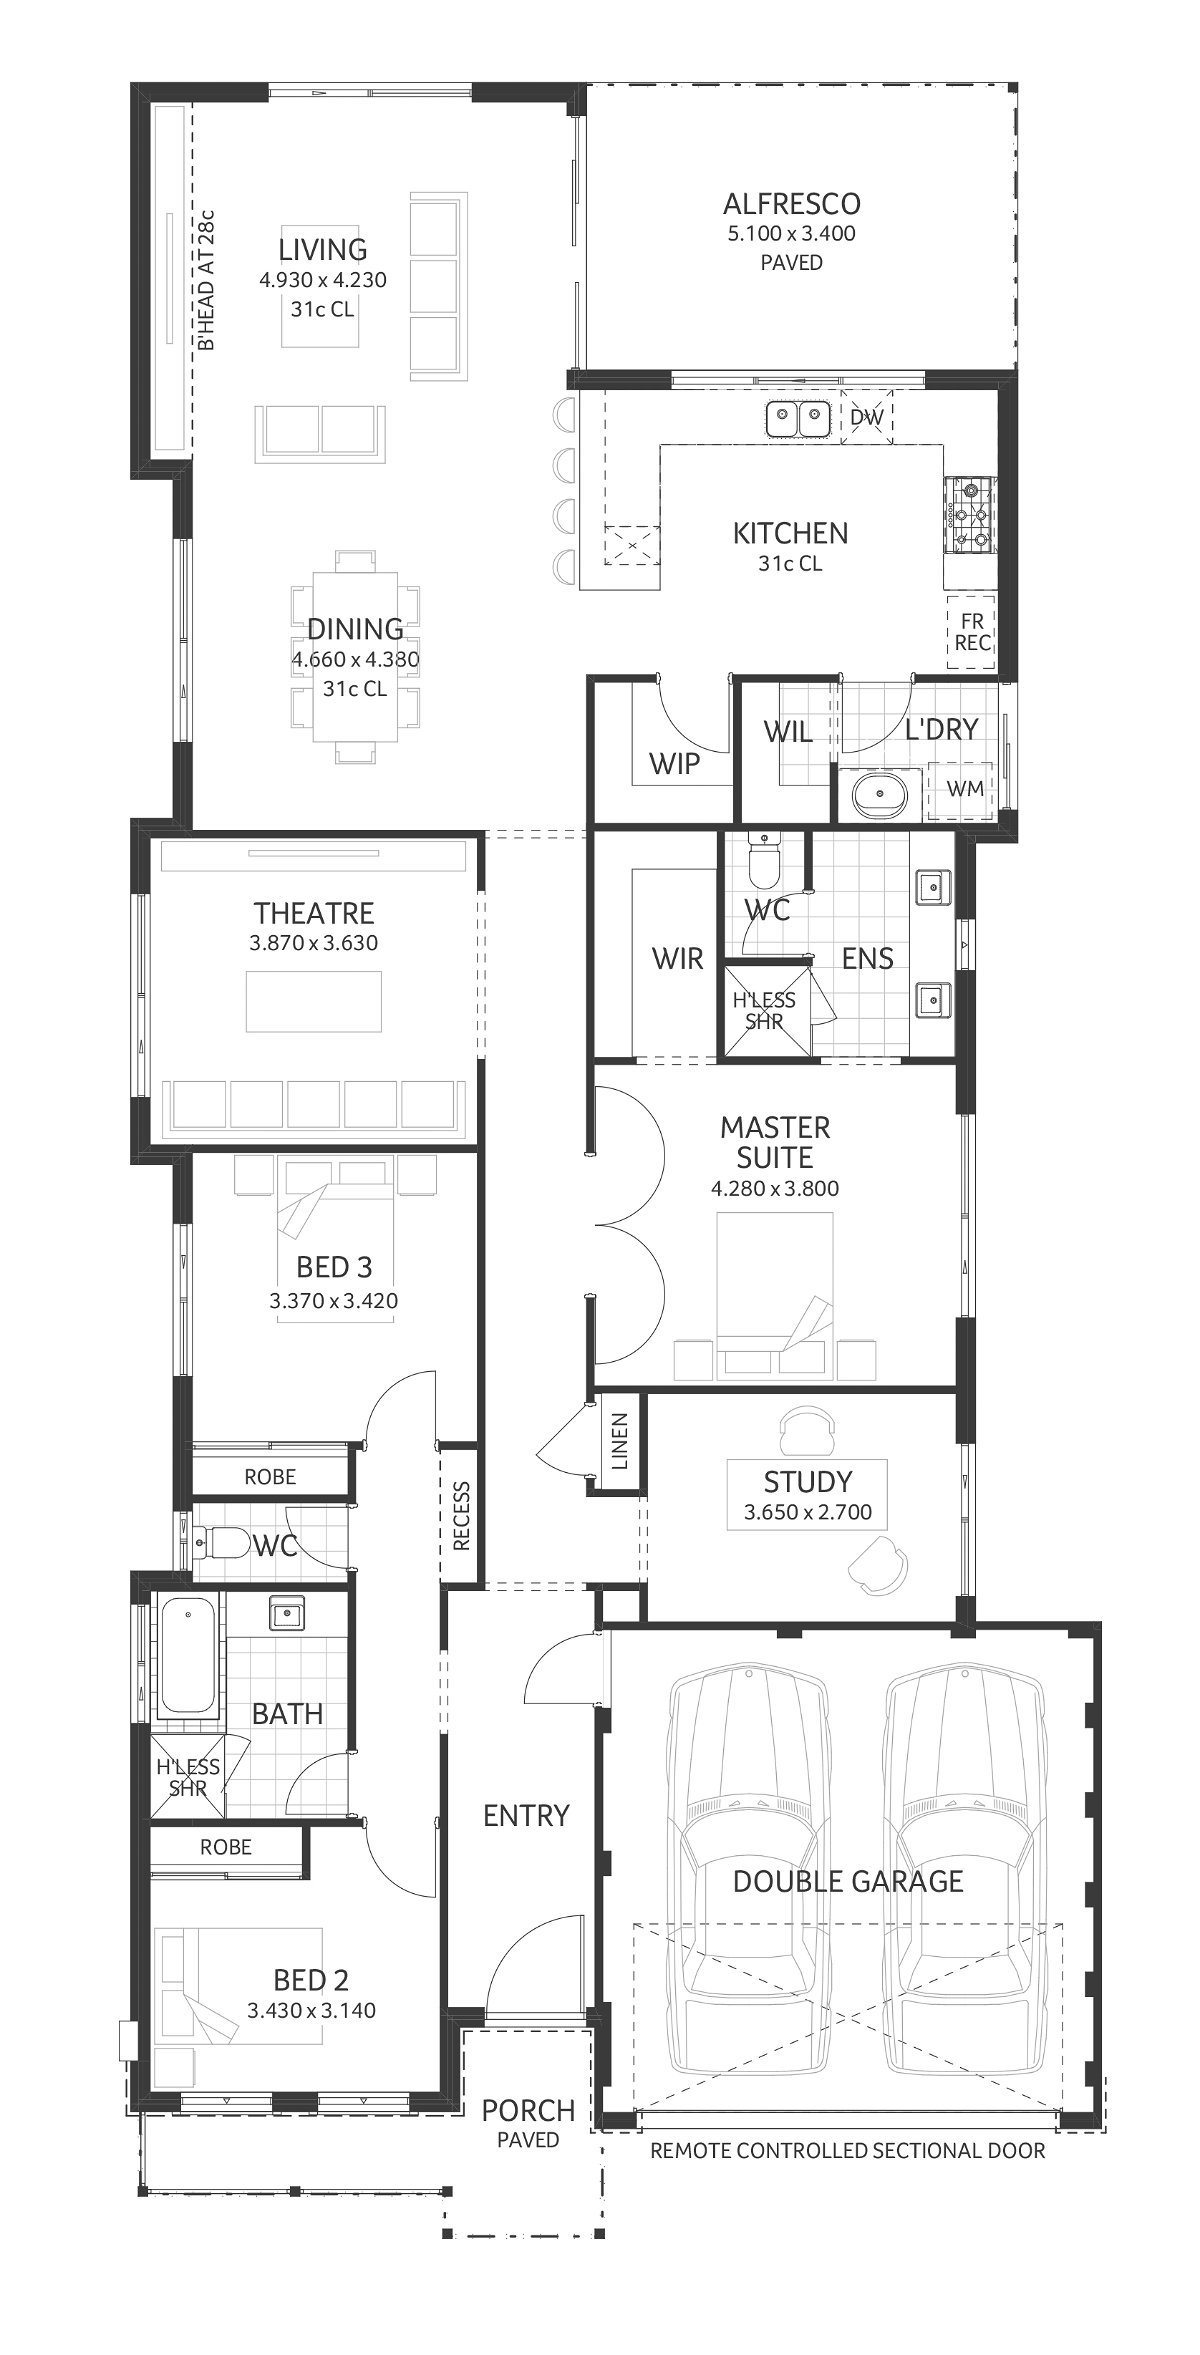 Plunkett Homes - Gracetown | Federation - Floorplan - Gracetown Luxe Federation Marketing Plan Cropped Jpg